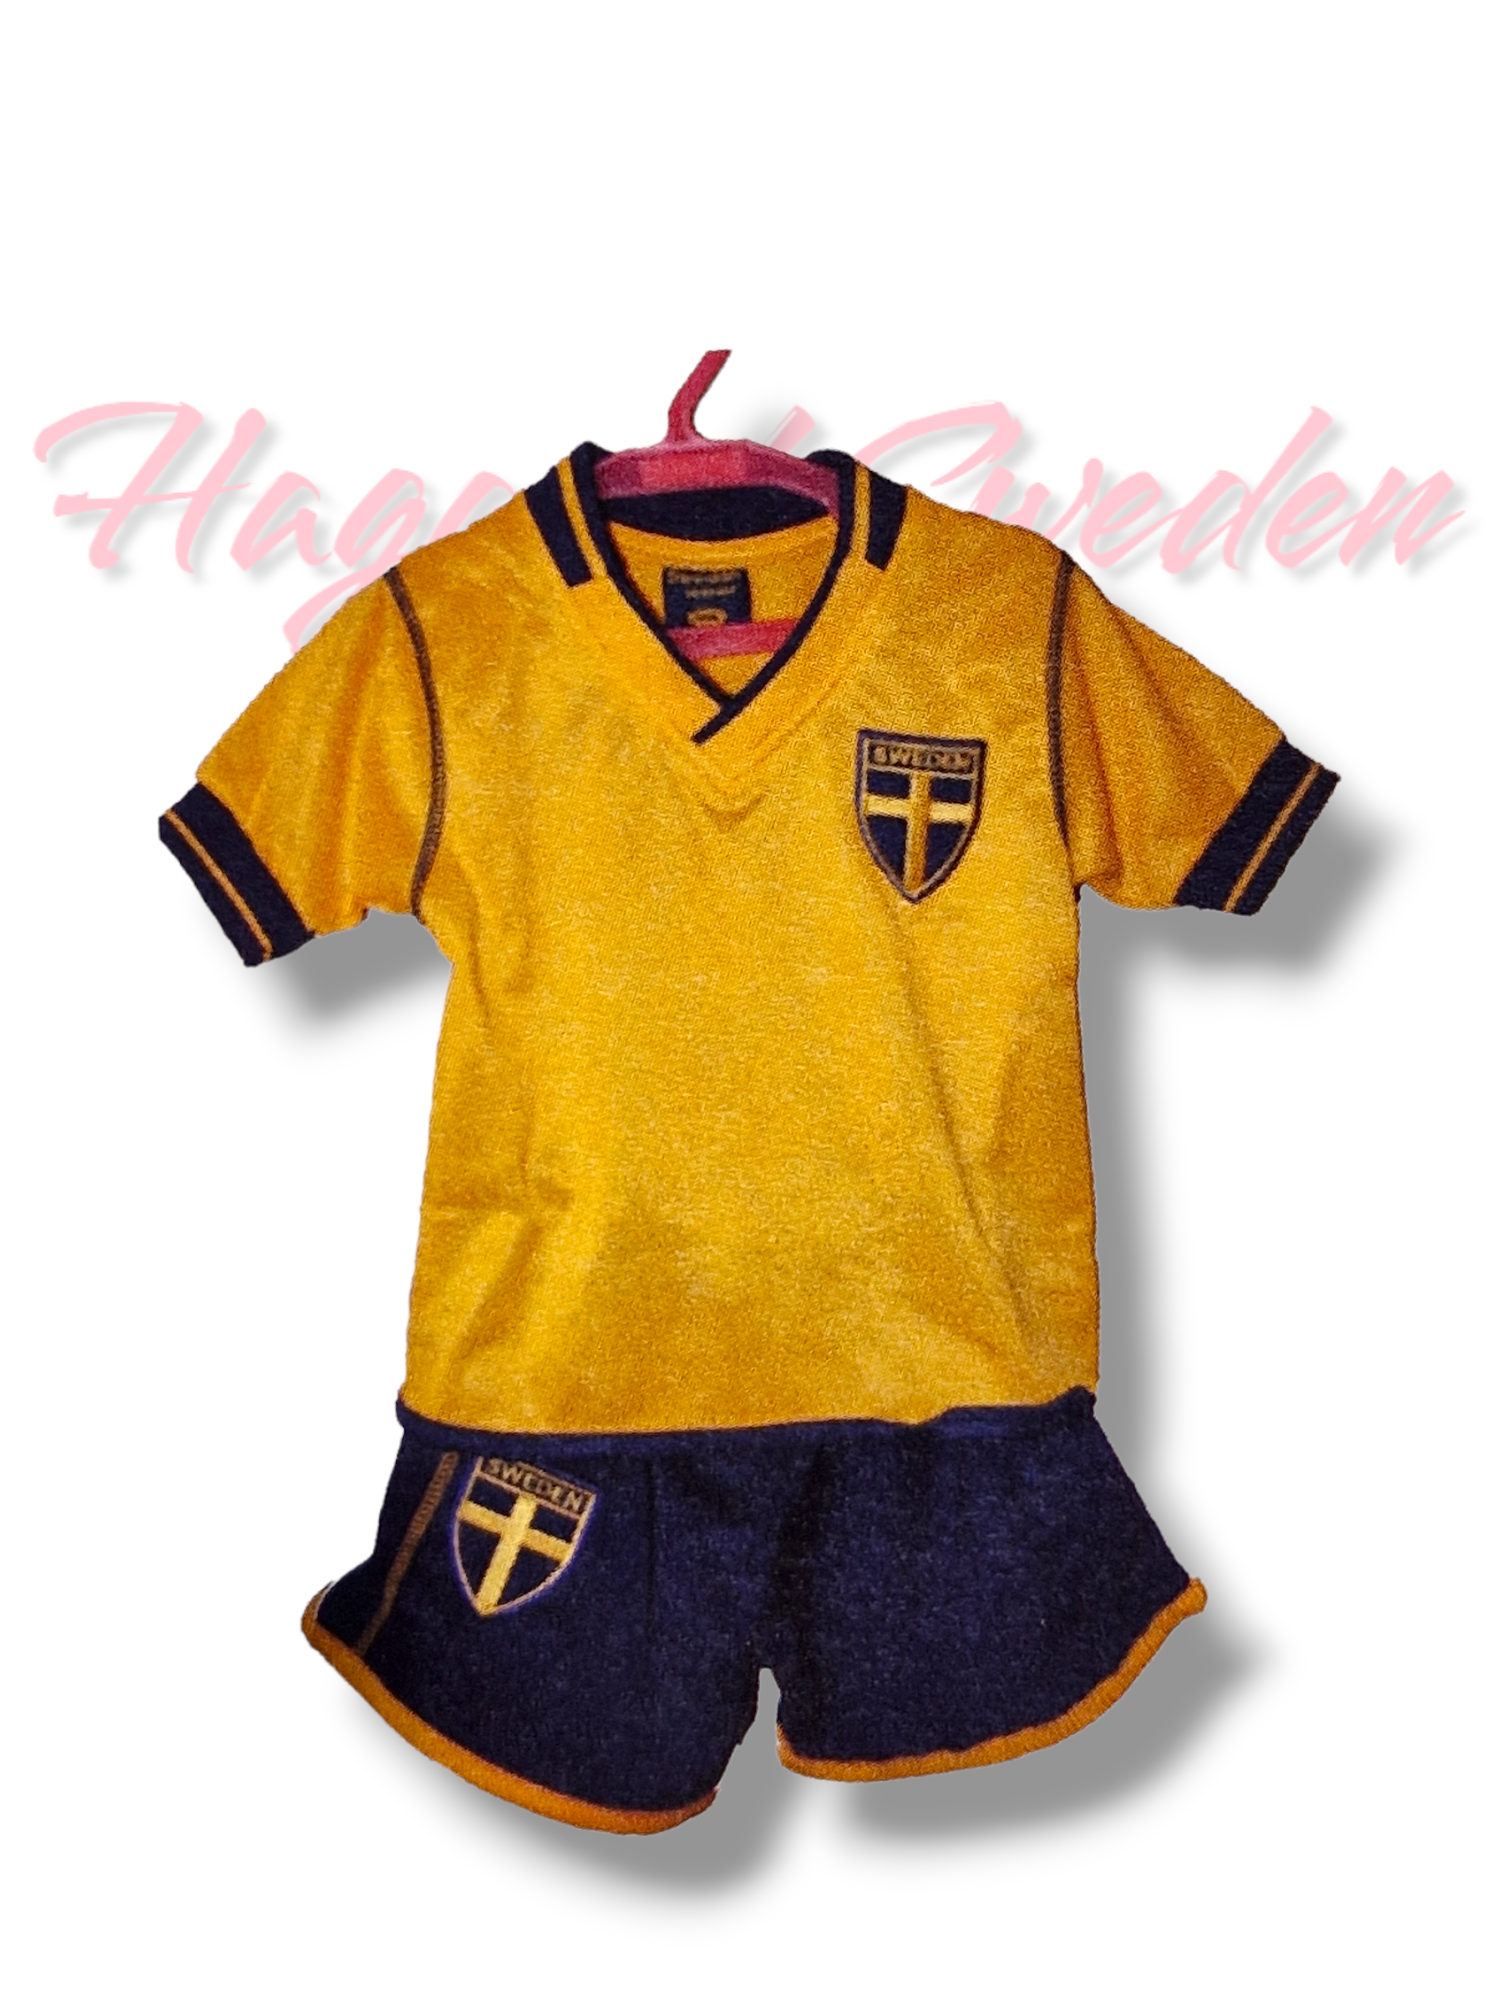 T-shirt & Shorts (Soccerset)